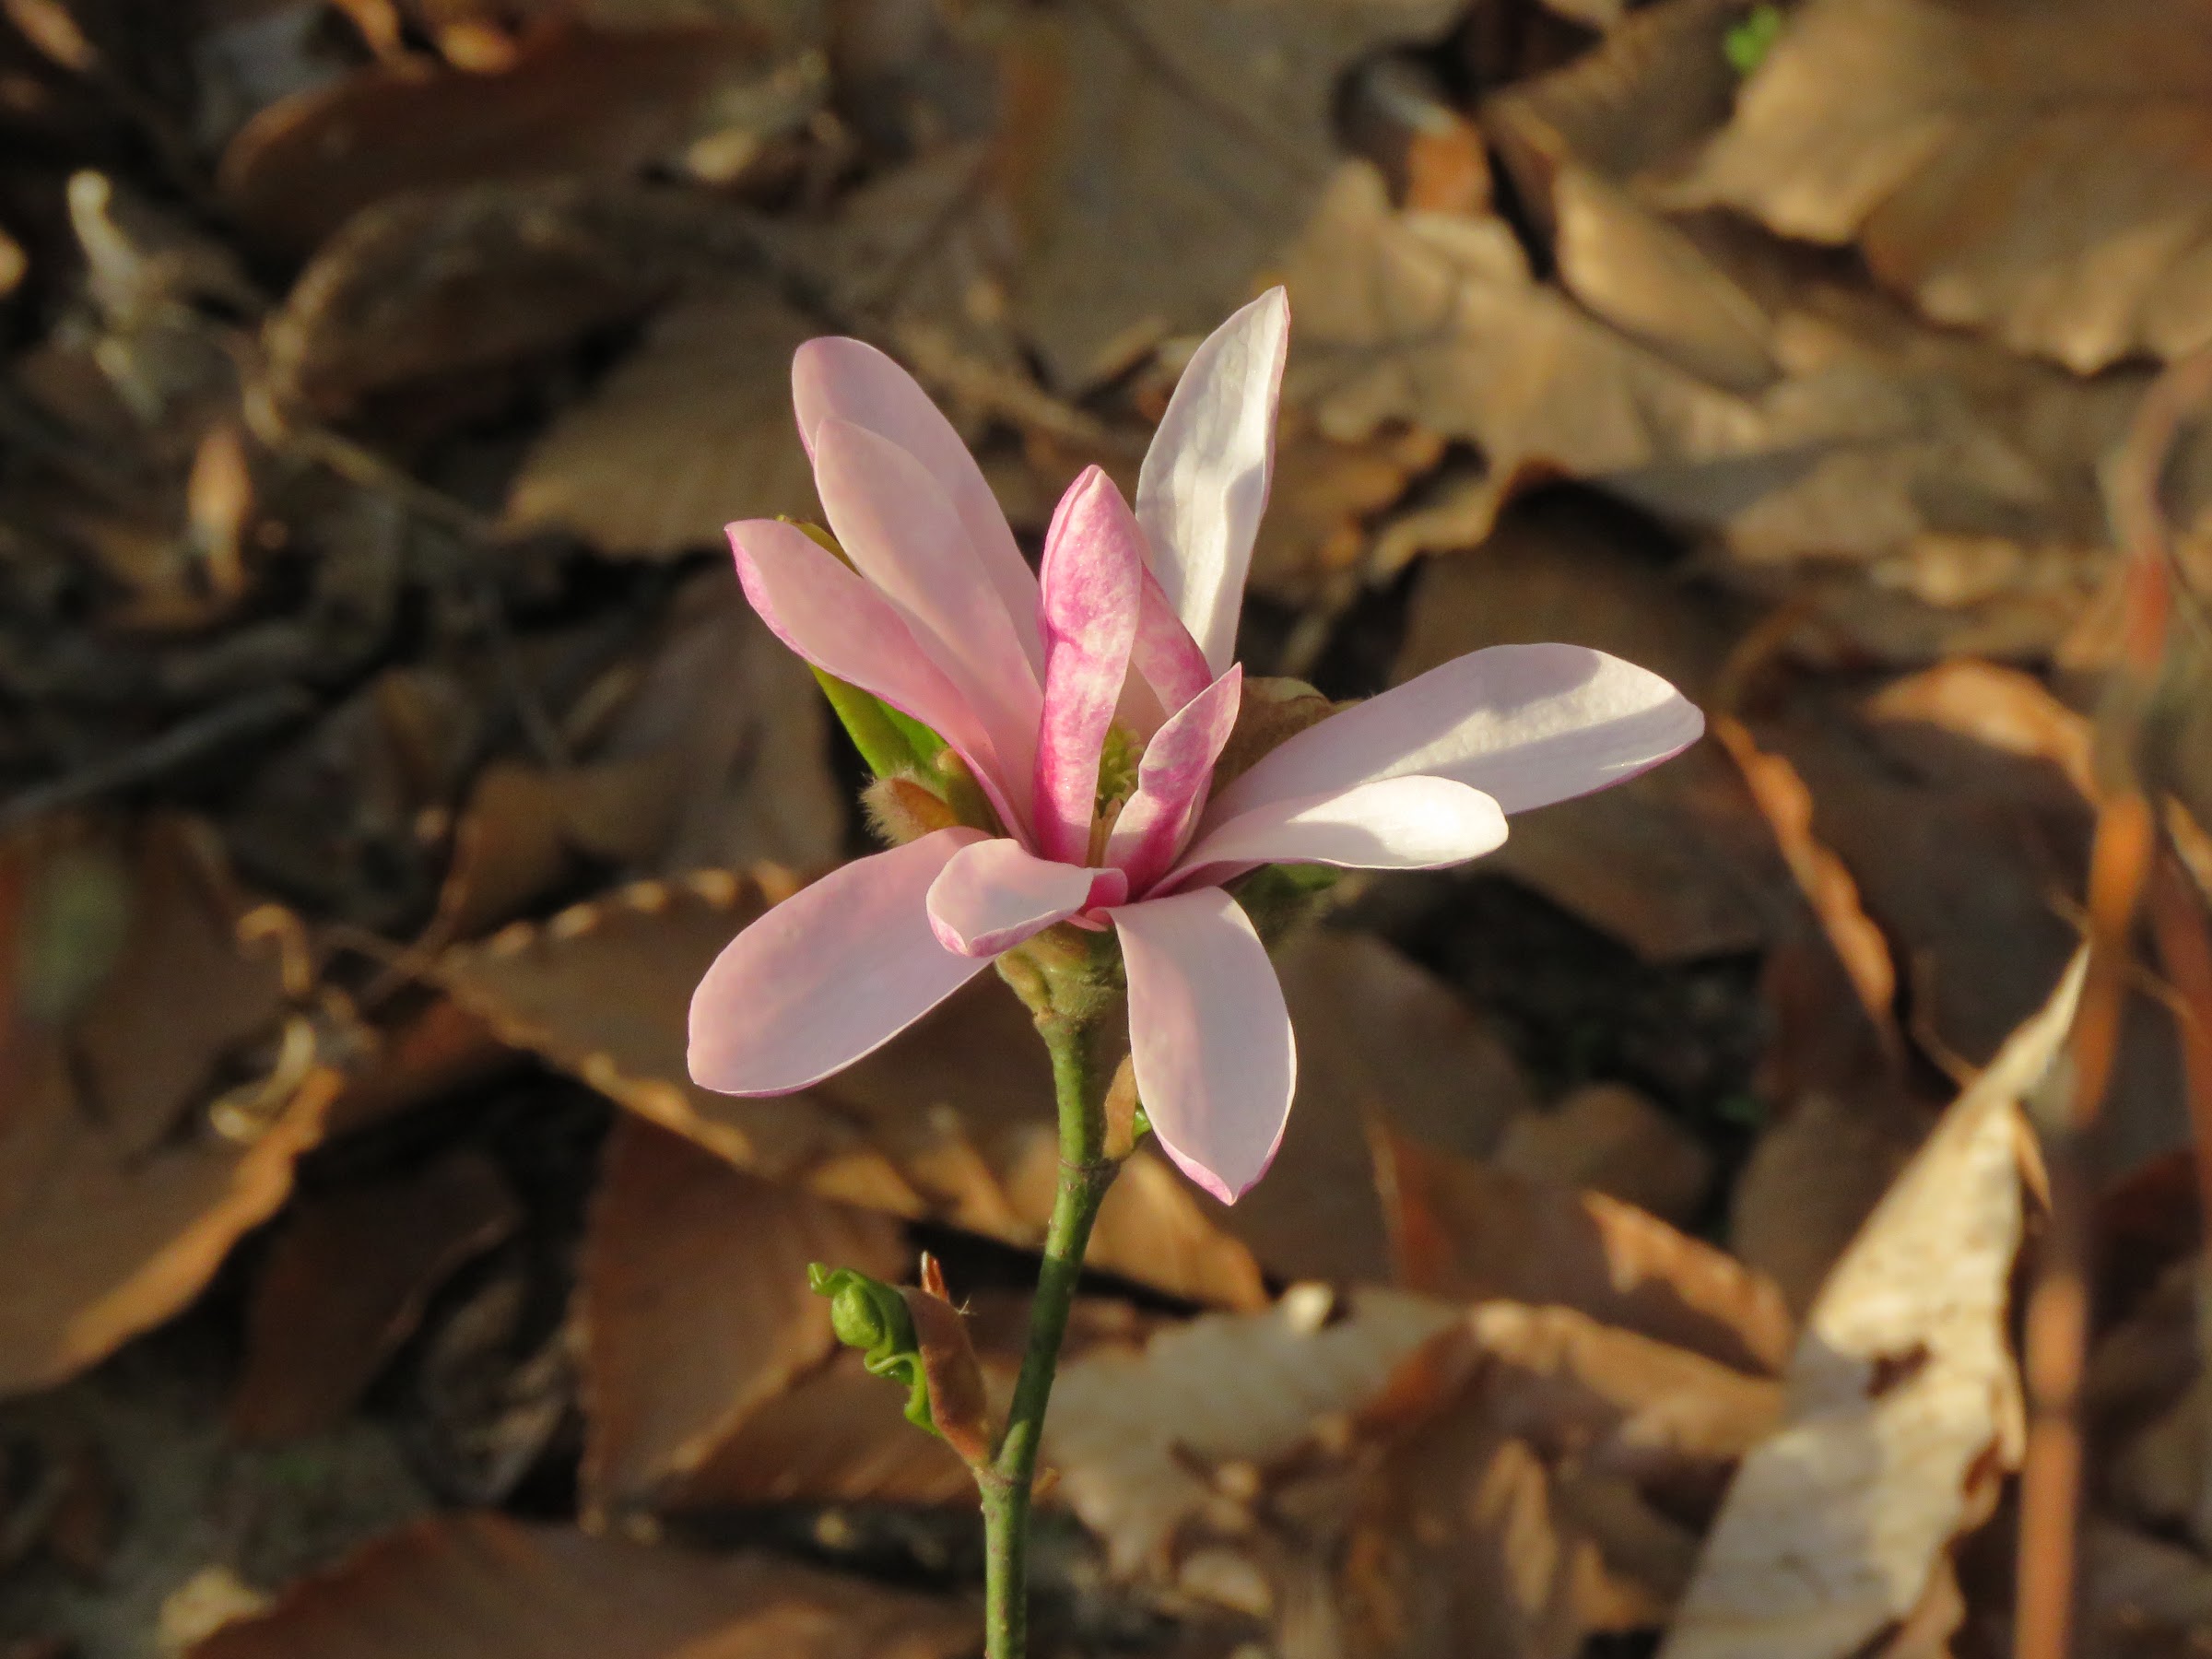 Magnolia ×loebneri Leonard Messel